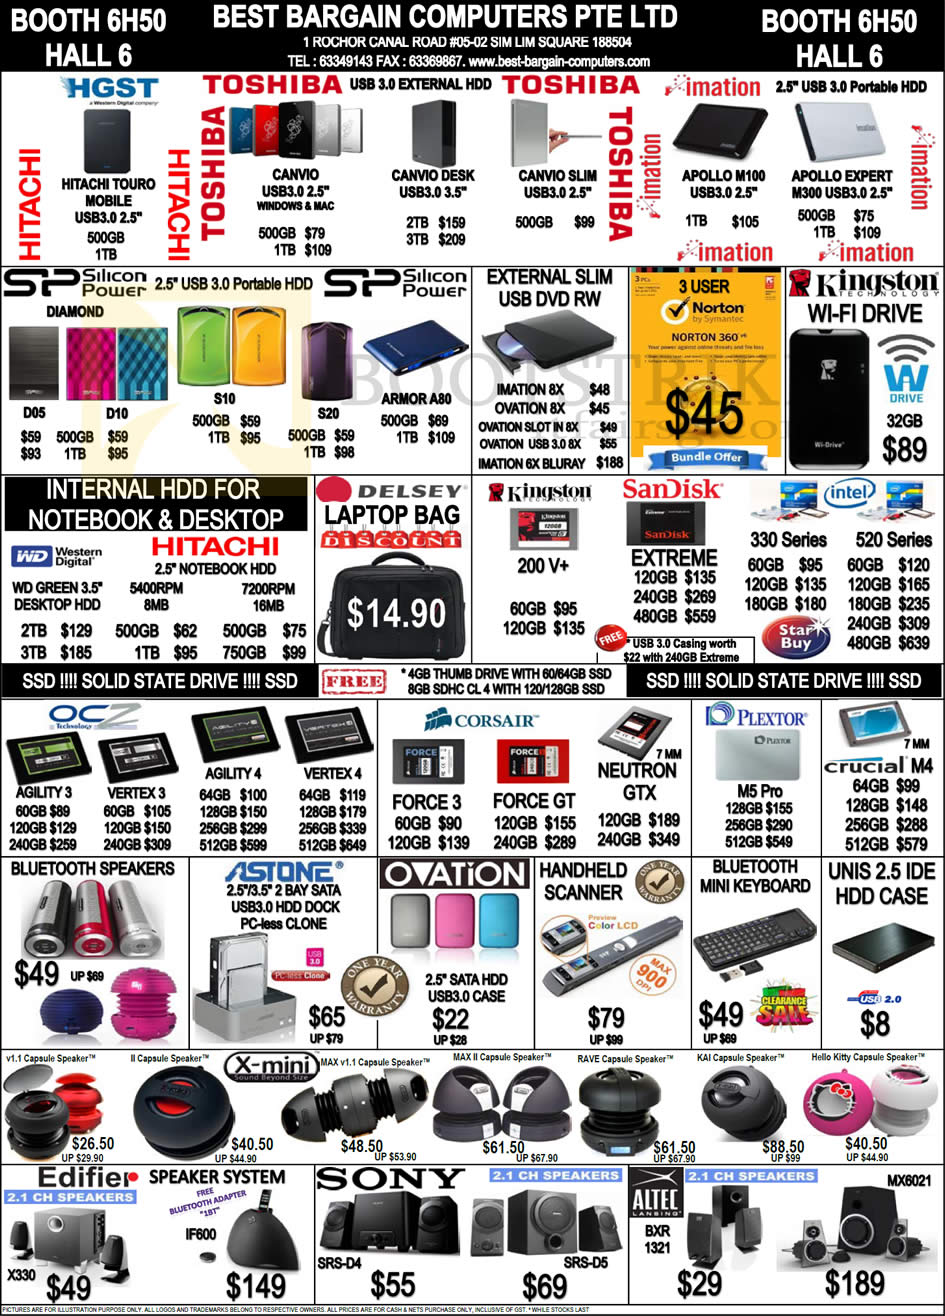 SITEX 2012 price list image brochure of Best Bargain External Storage Hitachi Toshia Imation SP, External Optical Drive, Norton, Internal Hard Disk, SSD OCZ Sandisk Corsair Crucial Plextor, Accessories, X-Mini, Speakers